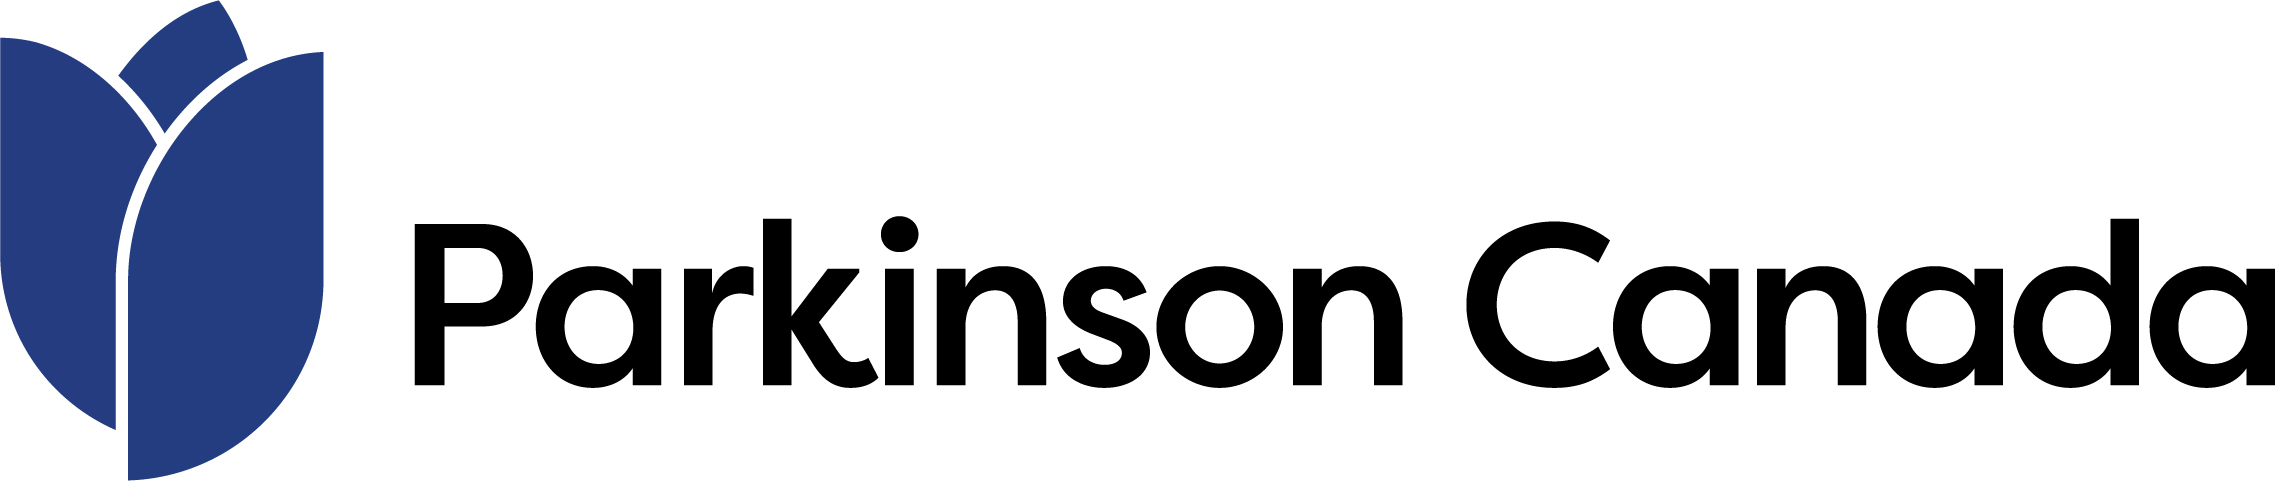 Parkinson Canada Research Program logo